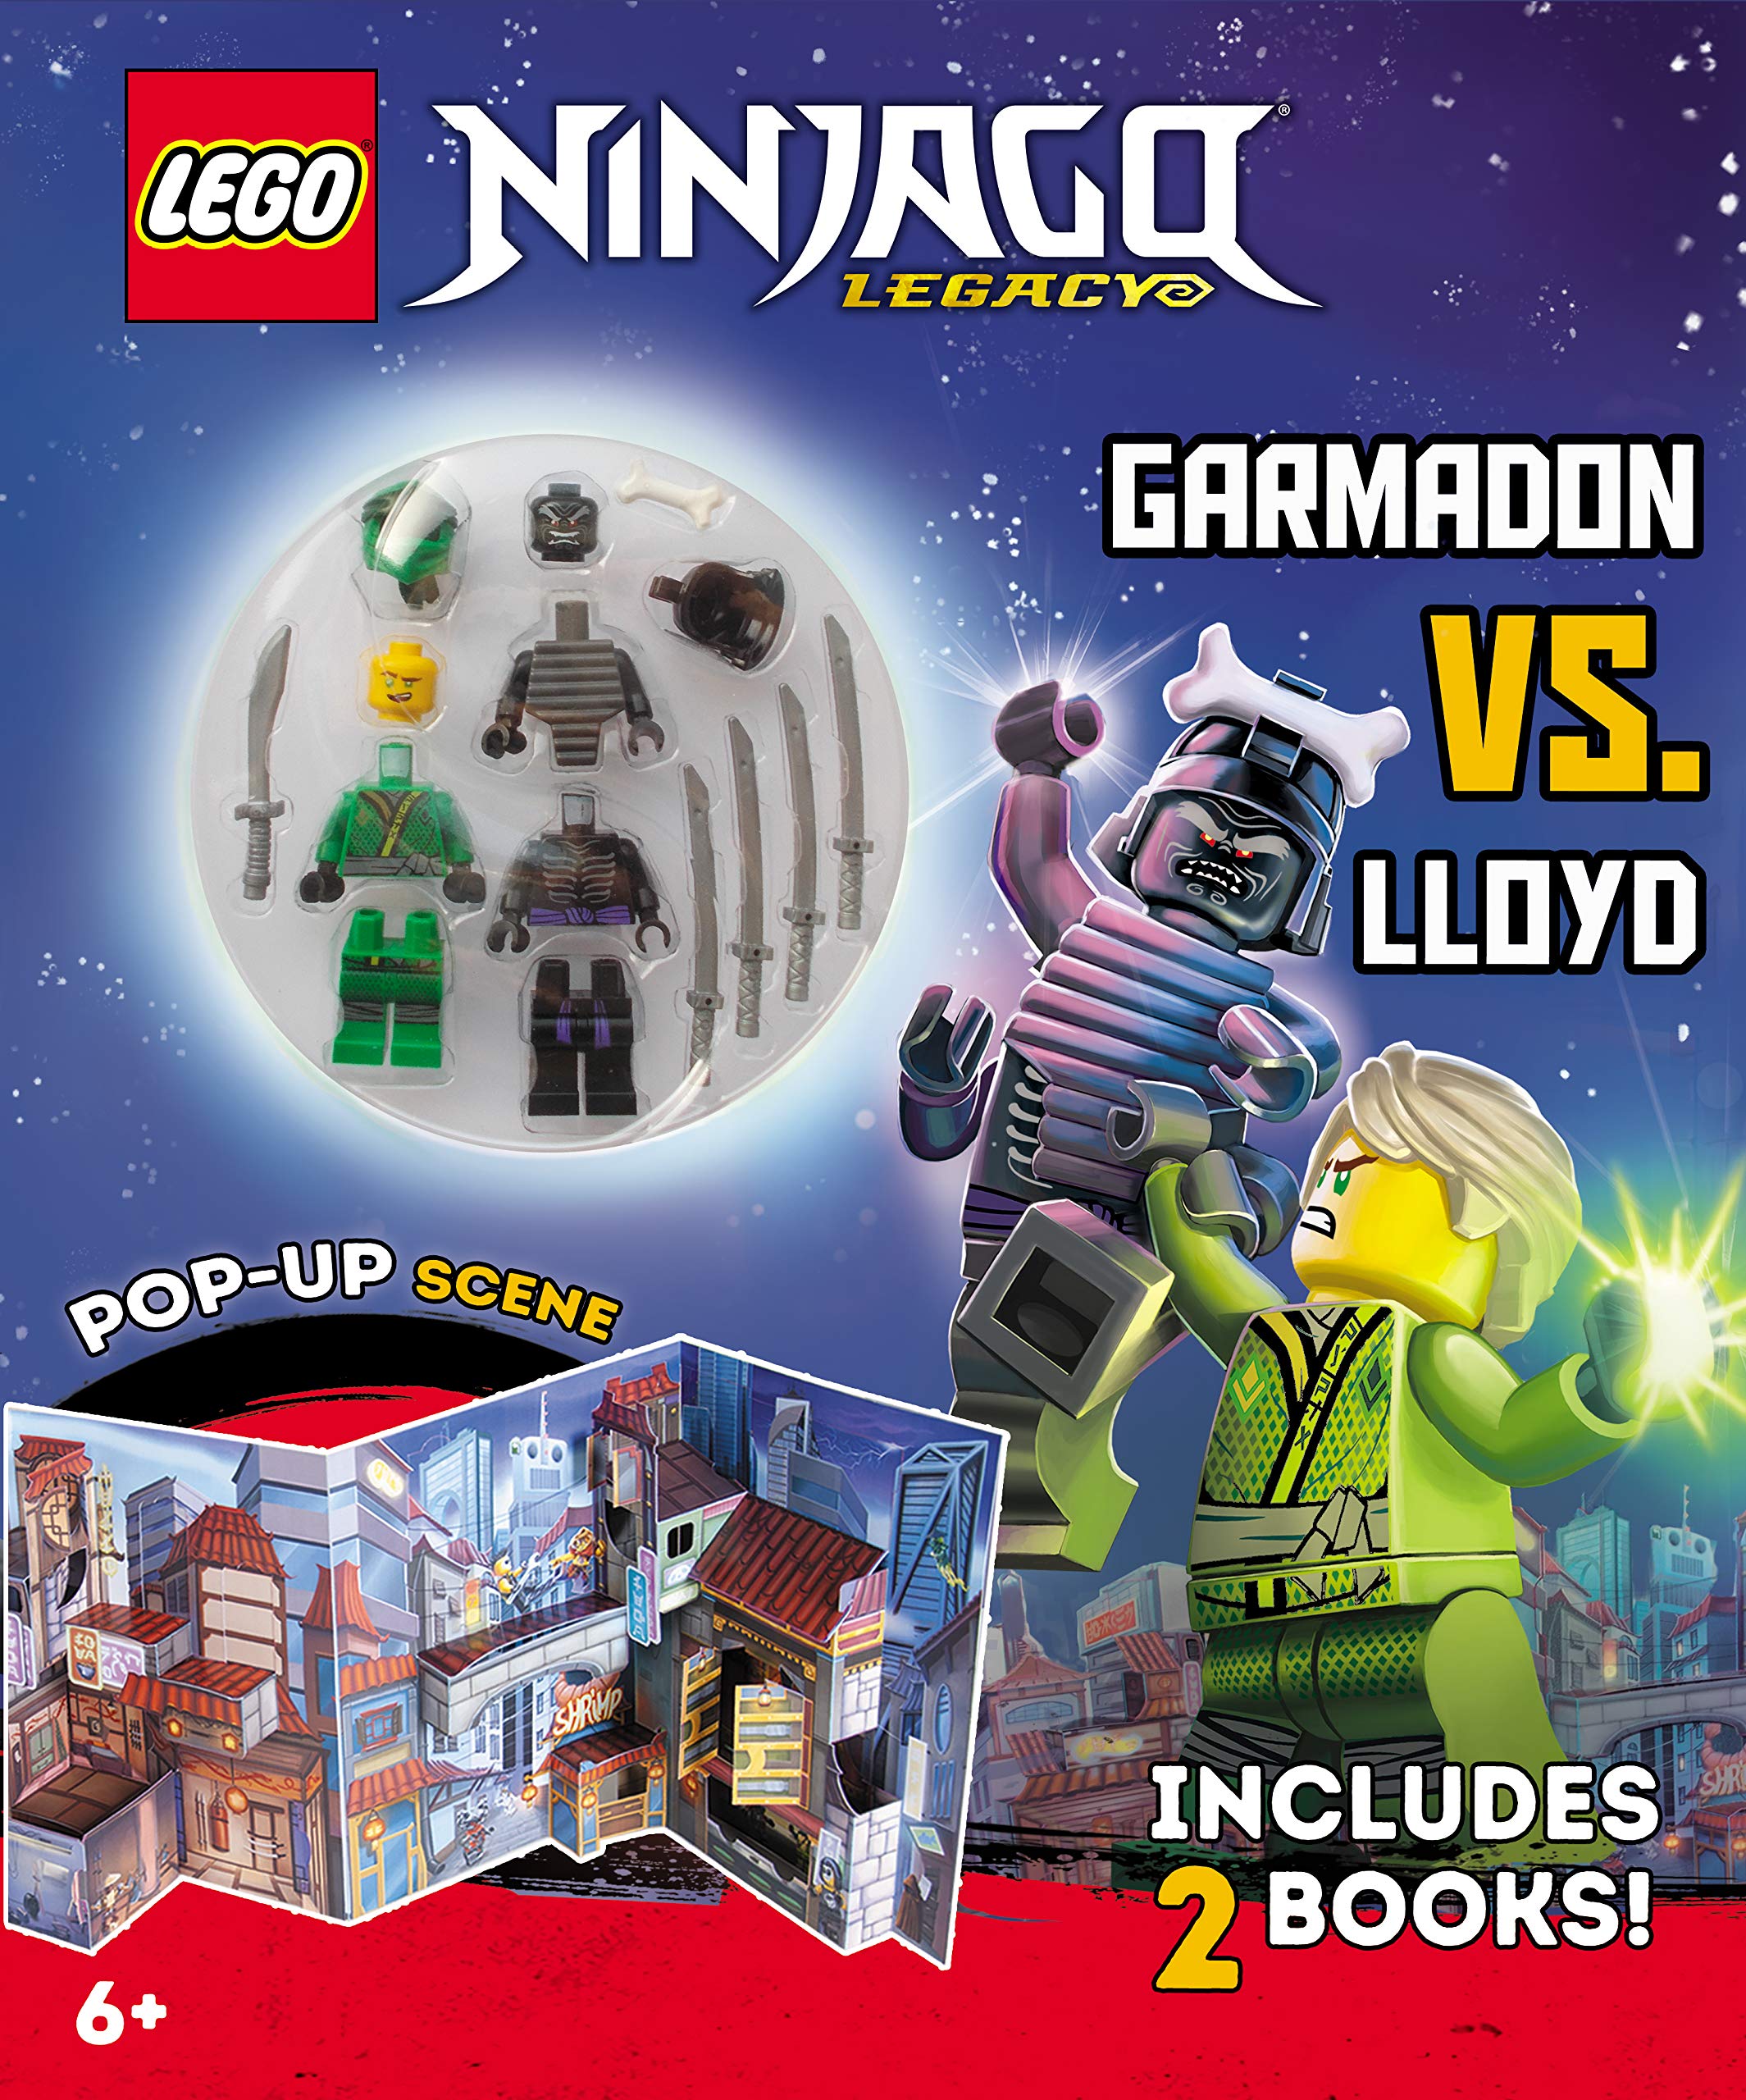 Lloyd Garmadon From Kai - The Lego Ninjago Movie Wallpapers